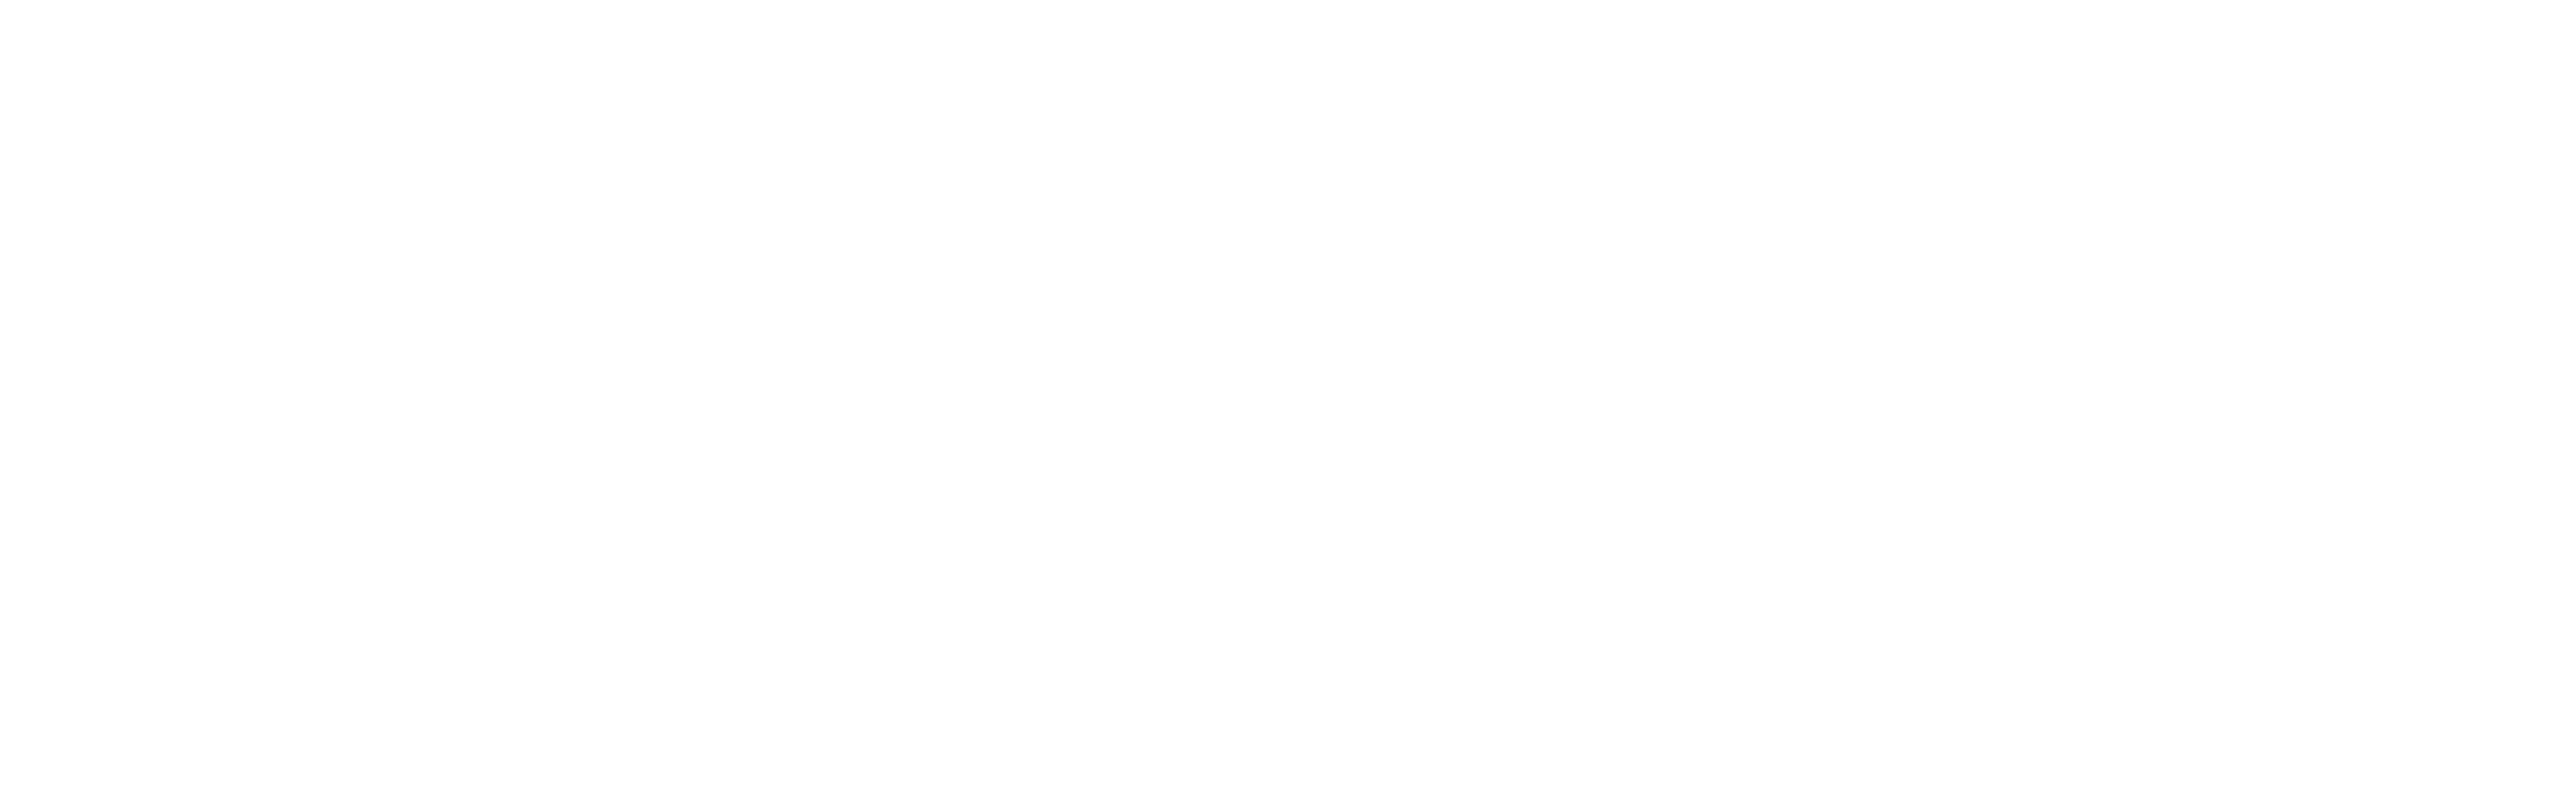 Fundraising Regulator.png